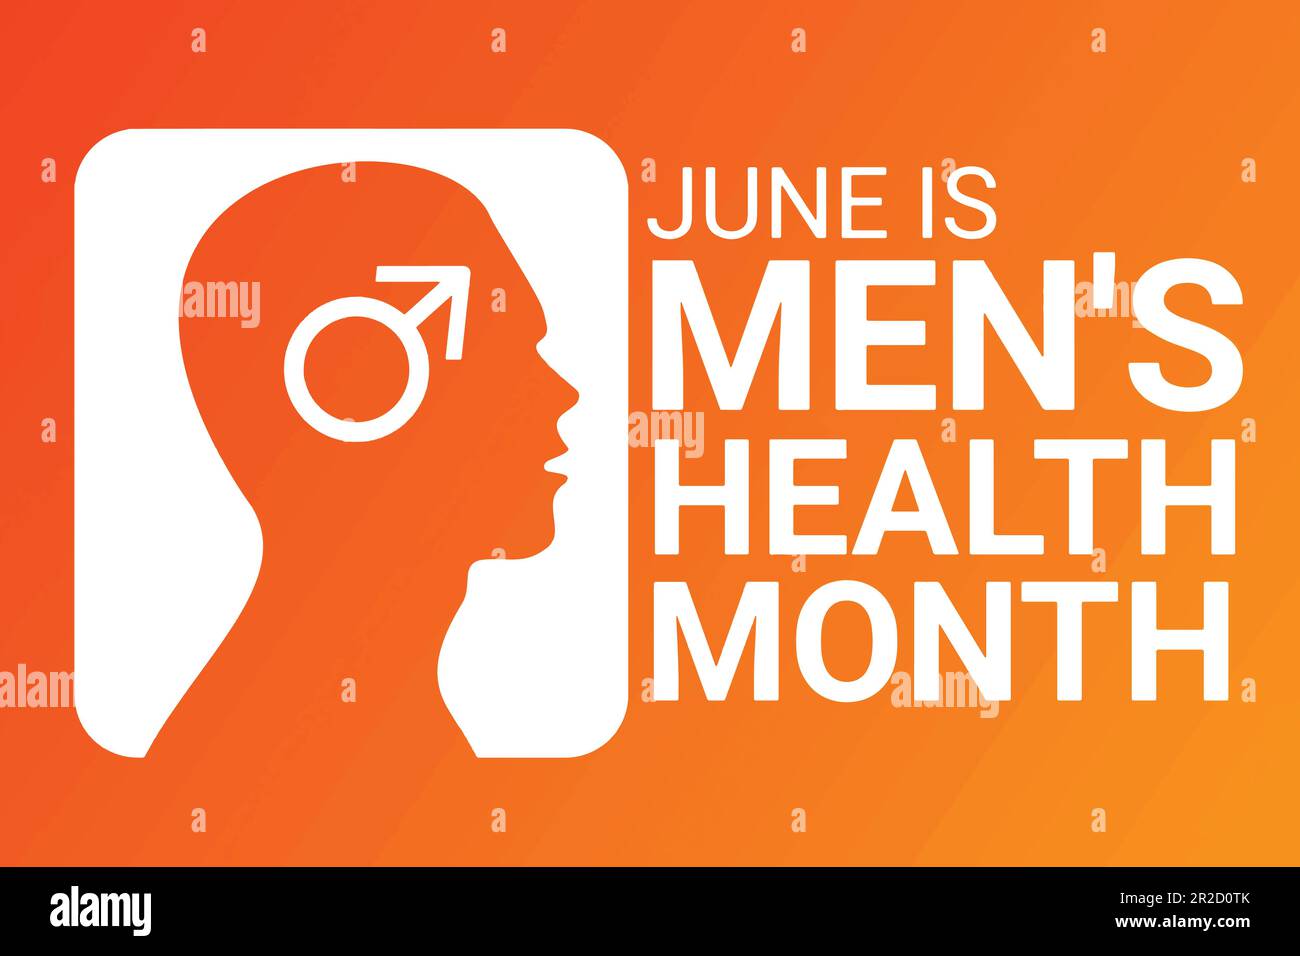 Men's Health month. June. Vector illustration Design for banner, poster or print. Stock Vector